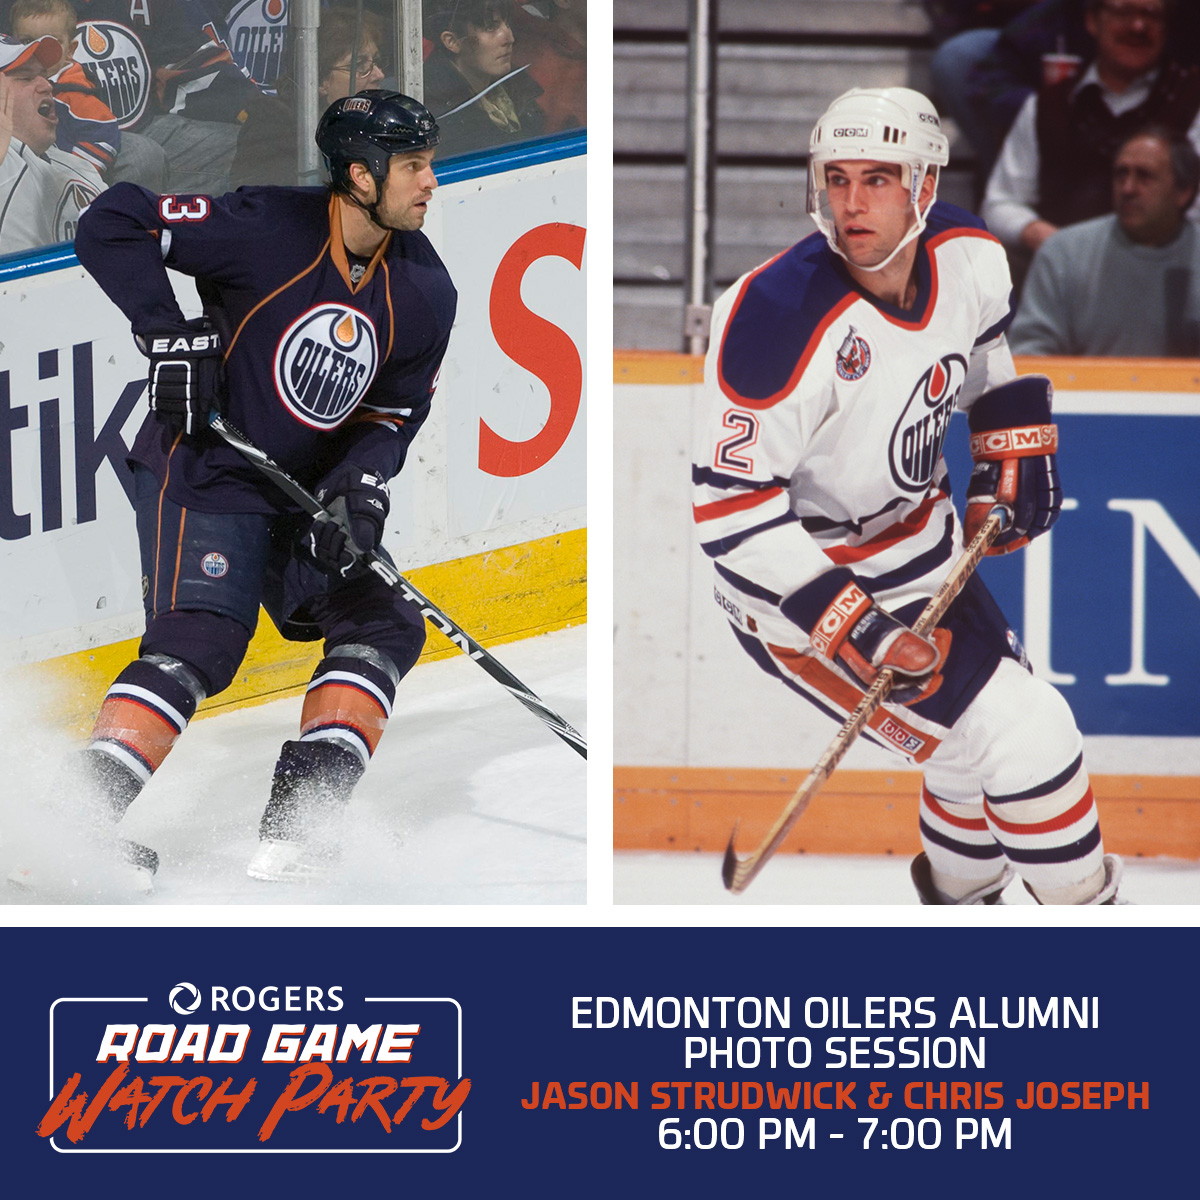 📷️ ALUMNI UPDATE!! 📷️ ⁠ @EdmontonOilers alumni Jason Strudwick & Chris Joseph will be taking photos with fans at tonight's @Rogers Road Game Watch Party!⁠